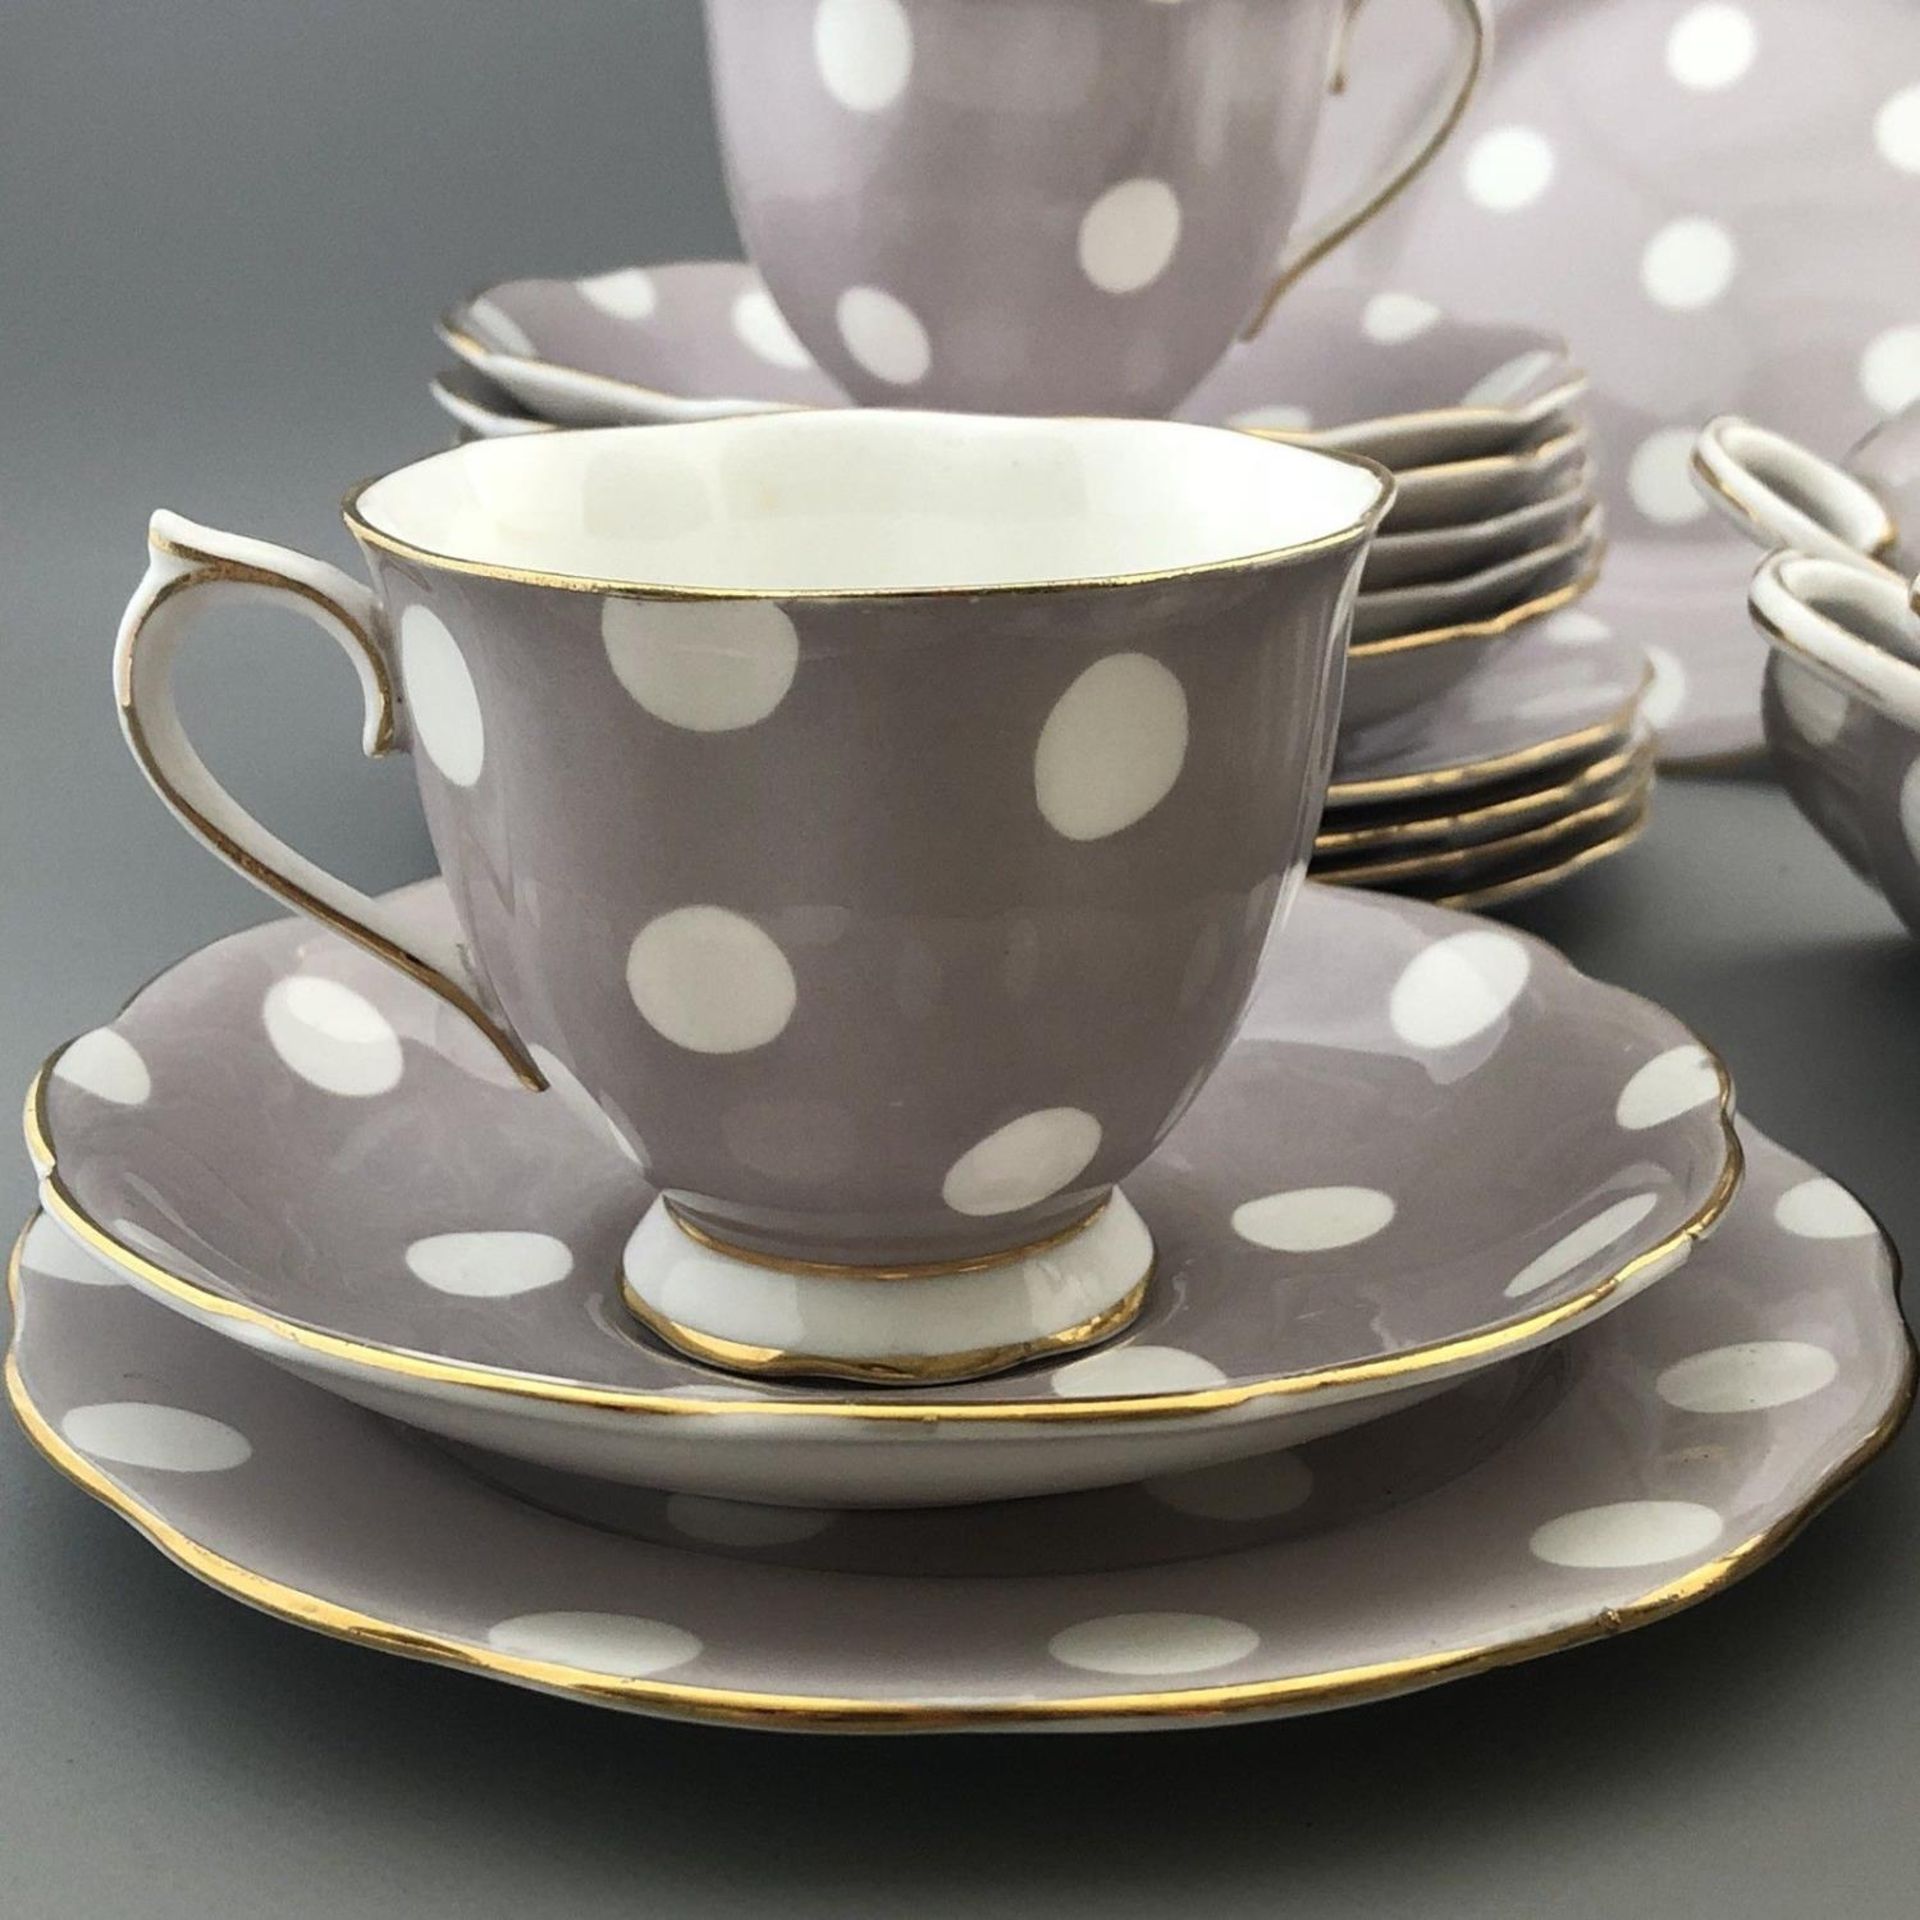 Vintage English Porcelain 18 Piece Tea Service Set ROYAL ALBERT Polka Dot 1950s - Image 2 of 10